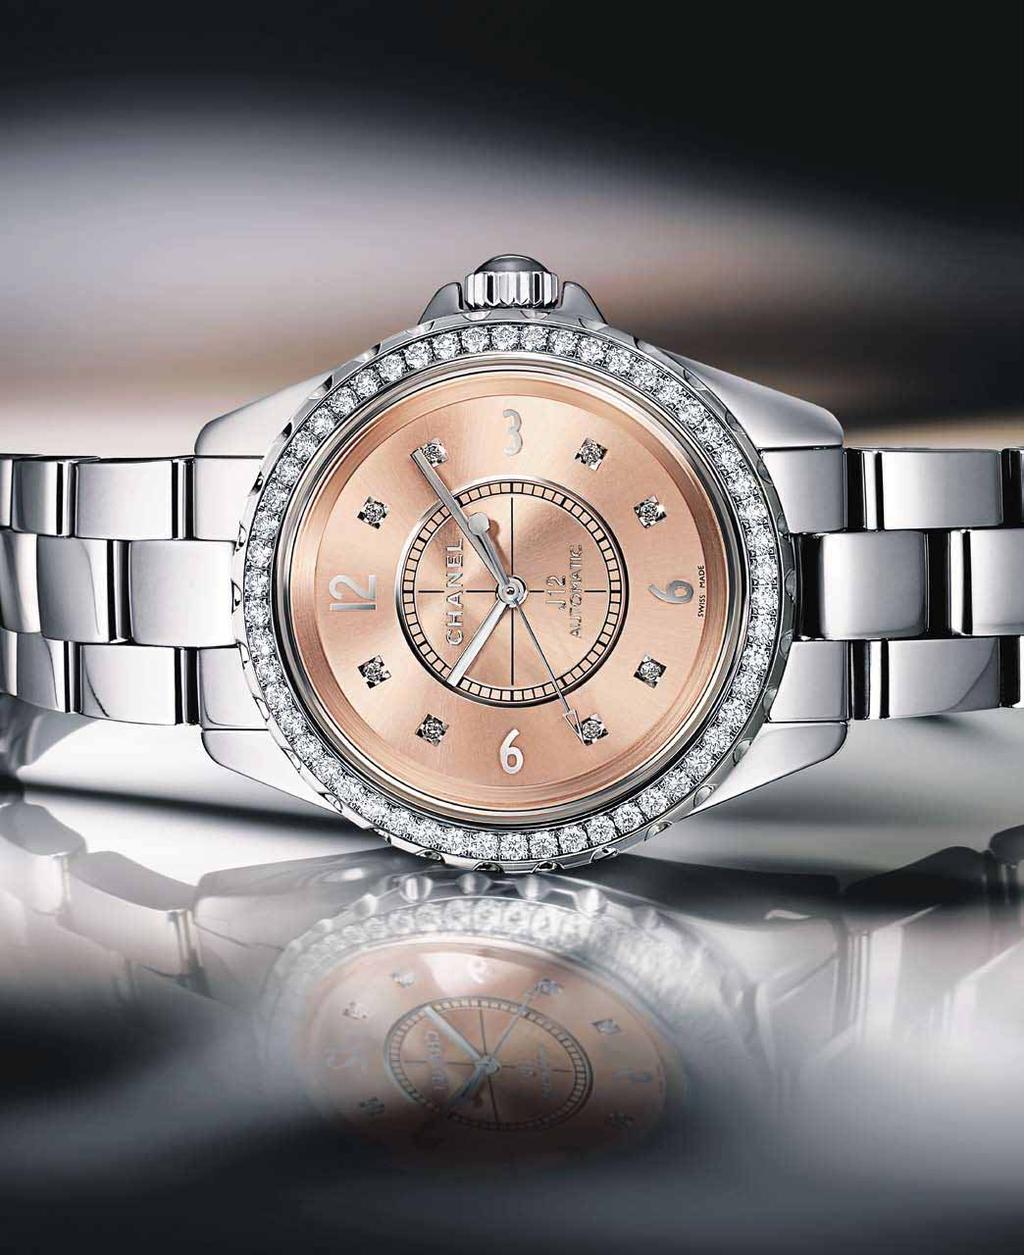 J12 CHROMATIC watch in titanium ceramic, a highly scratch-resistant material.